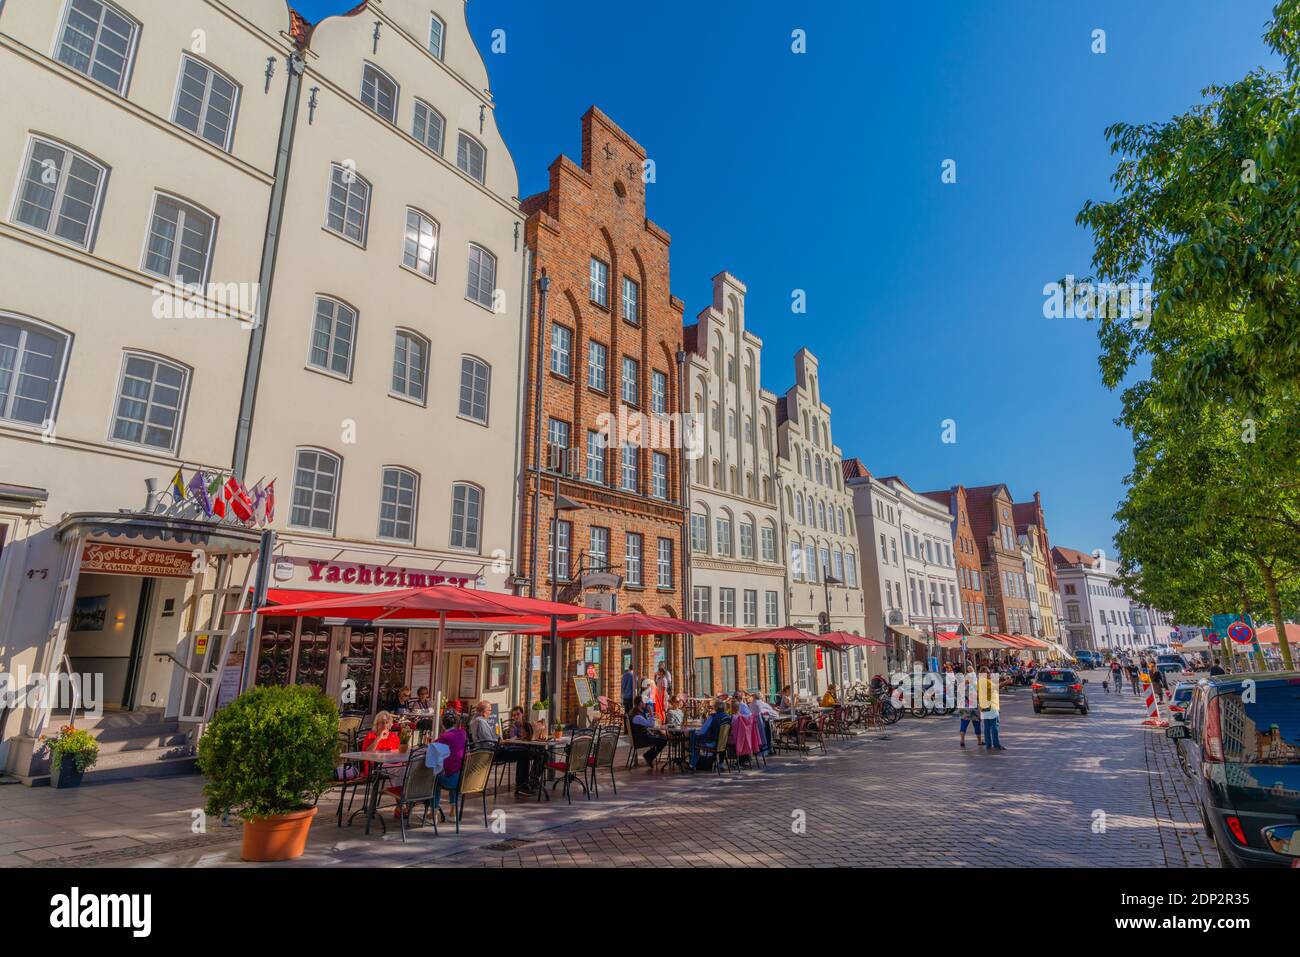 Insieme di case storiche, caffè e ristoranti in Via An der Obertrave, Città anseatica di Lübeck, Schleswig-Holstein, germania del Nord, Europa Foto Stock